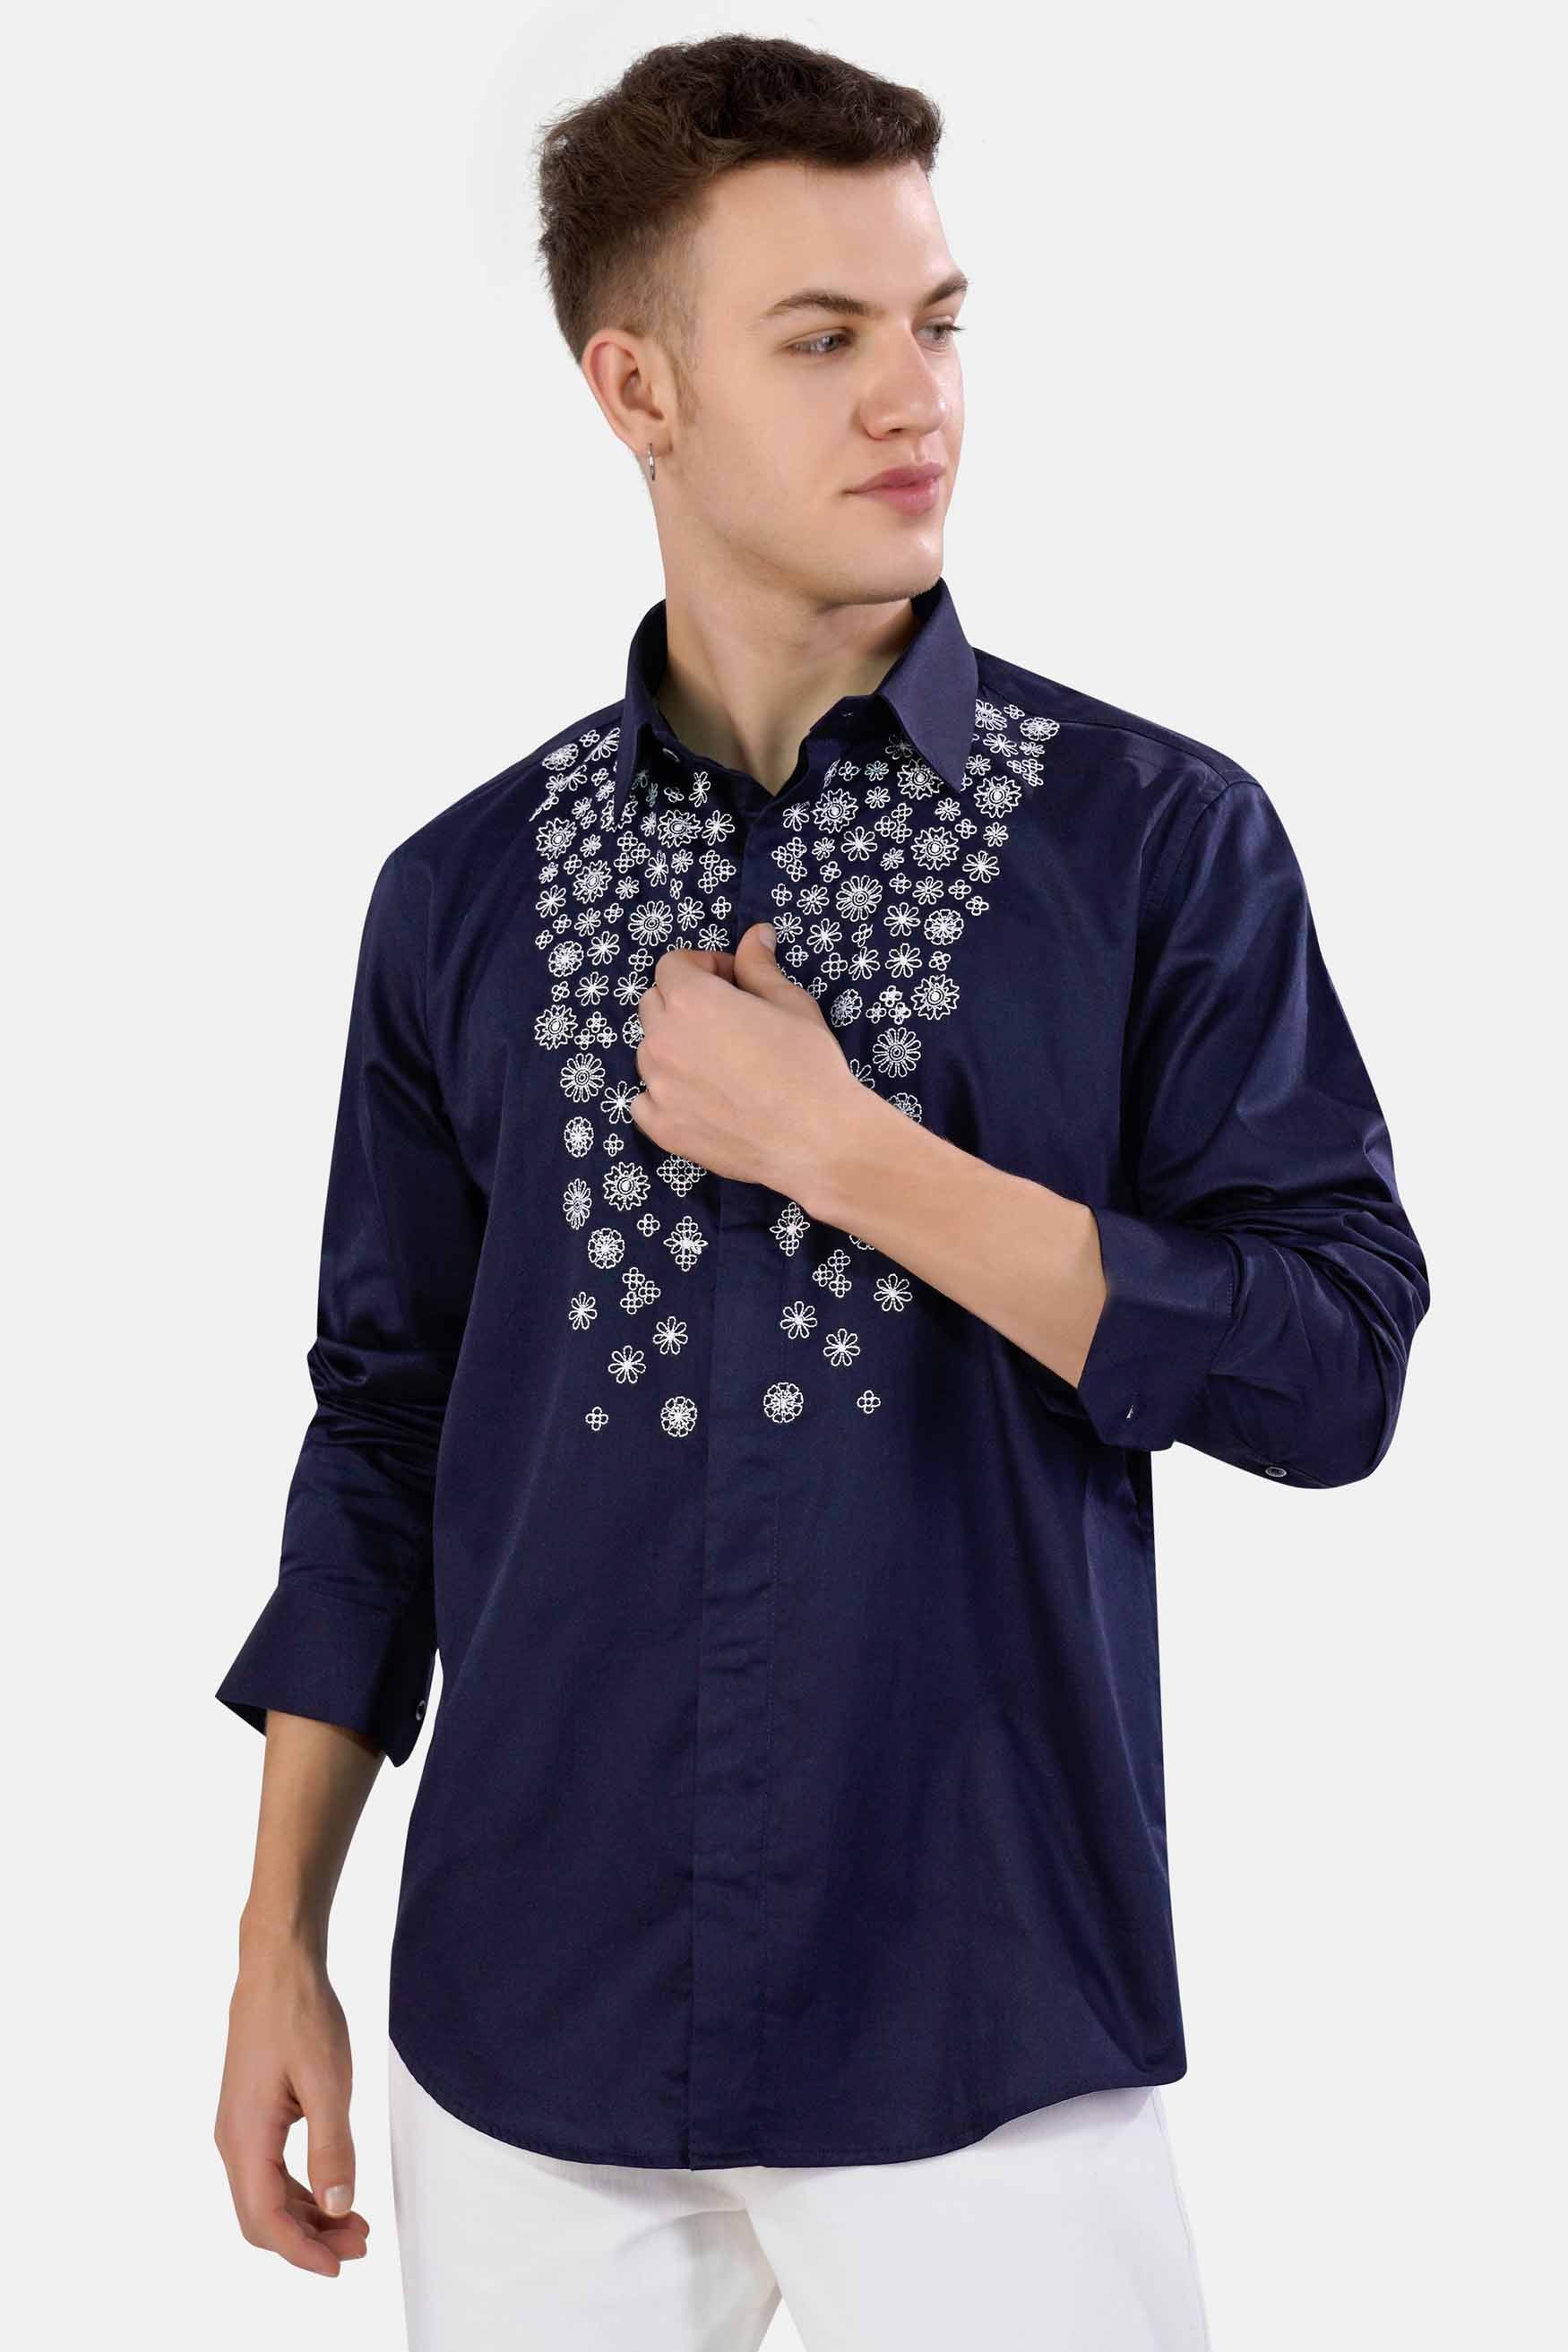 Haiti Blue Floral Embroidered Super Soft Premium Cotton Designer Shirt